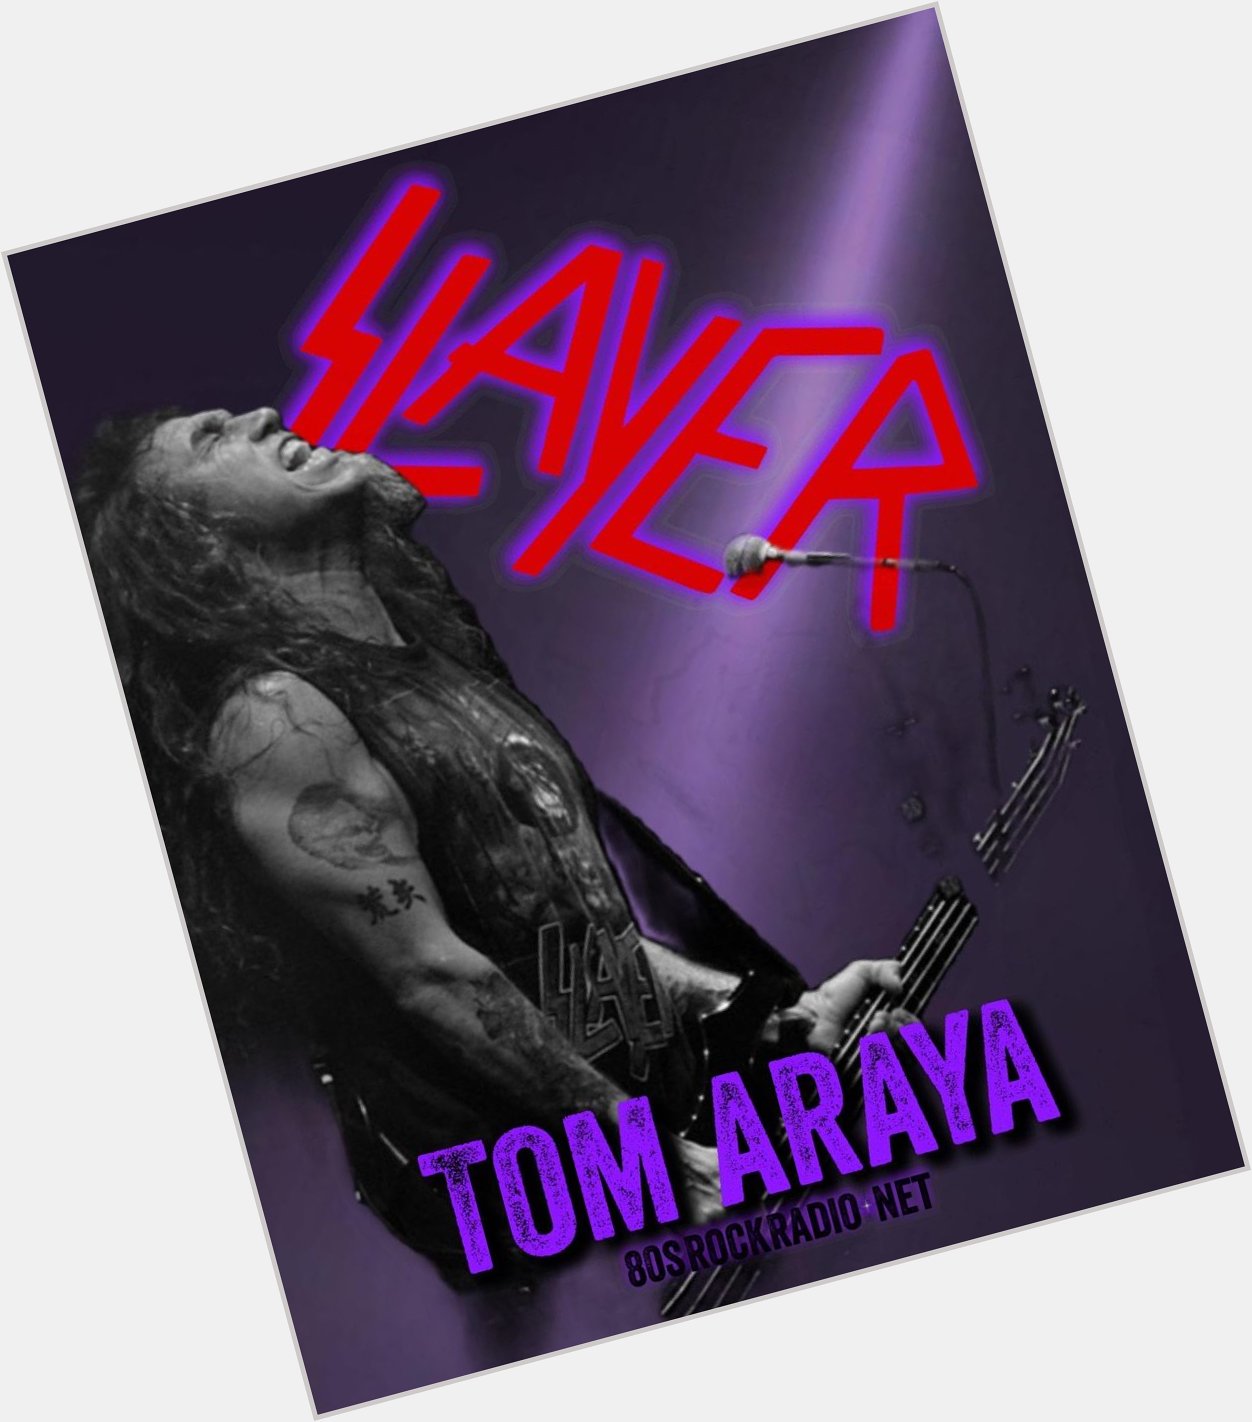 Happy Birthday Tom Araya
Bassist/singer Slayer
June 6, 1961 Vina del Mar, Chile 